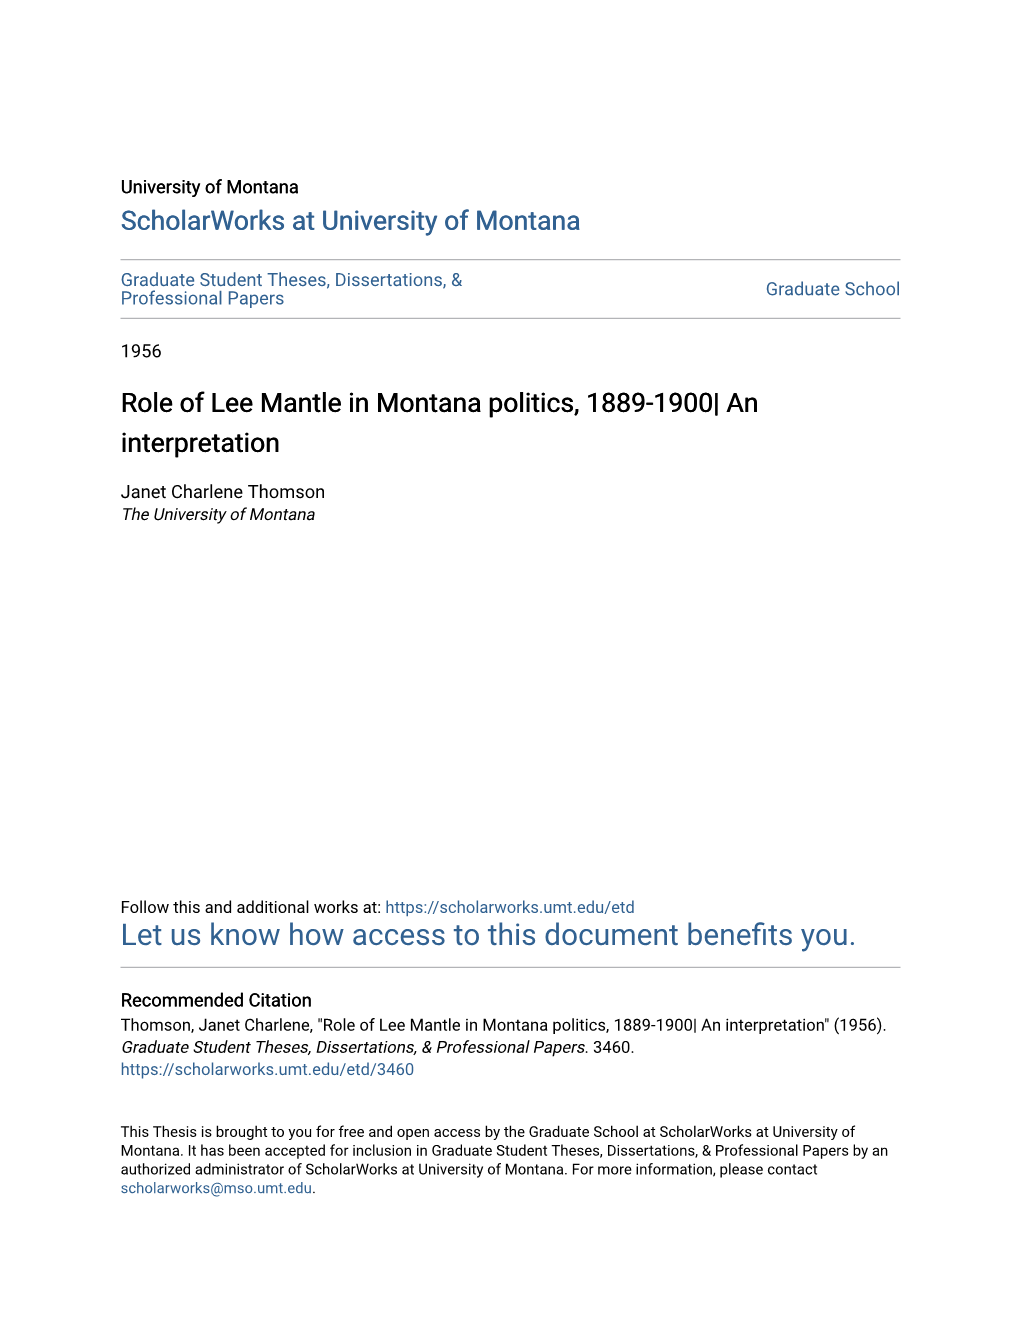 Role of Lee Mantle in Montana Politics, 1889-1900| an Interpretation